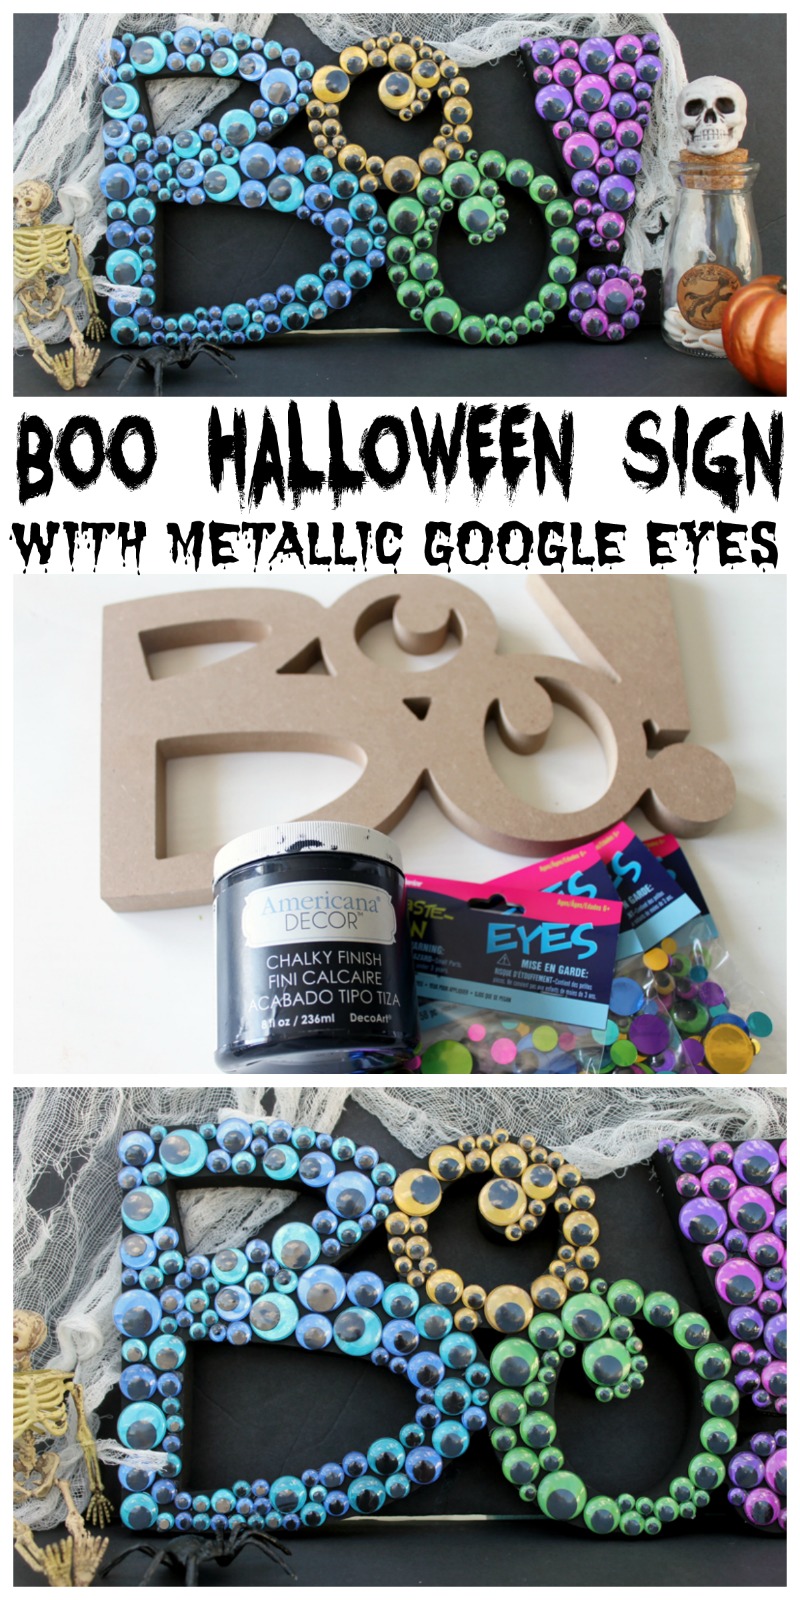 Halloween boo sign pin image